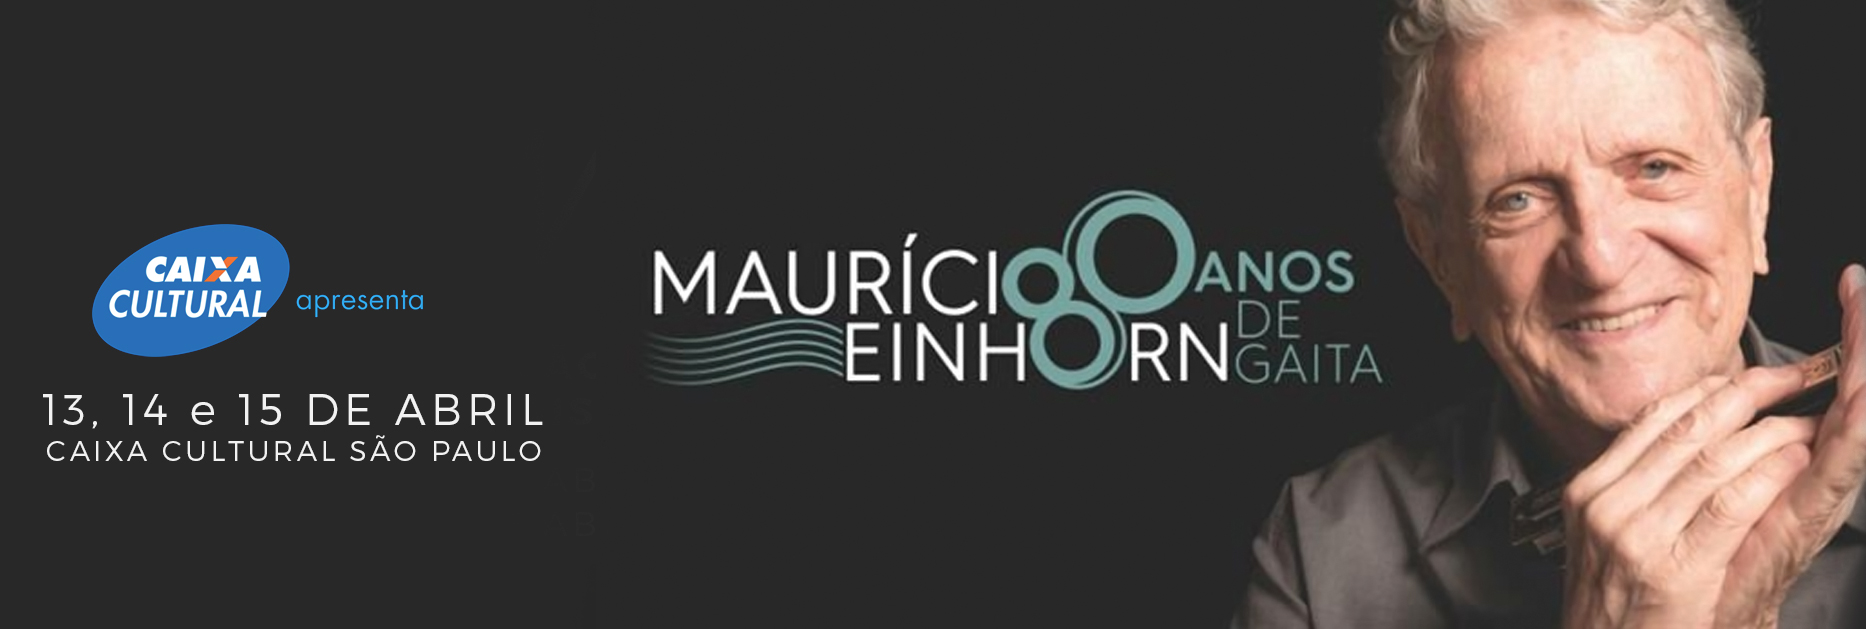 Mauricio Einhorn comemora 80 anos de gaita